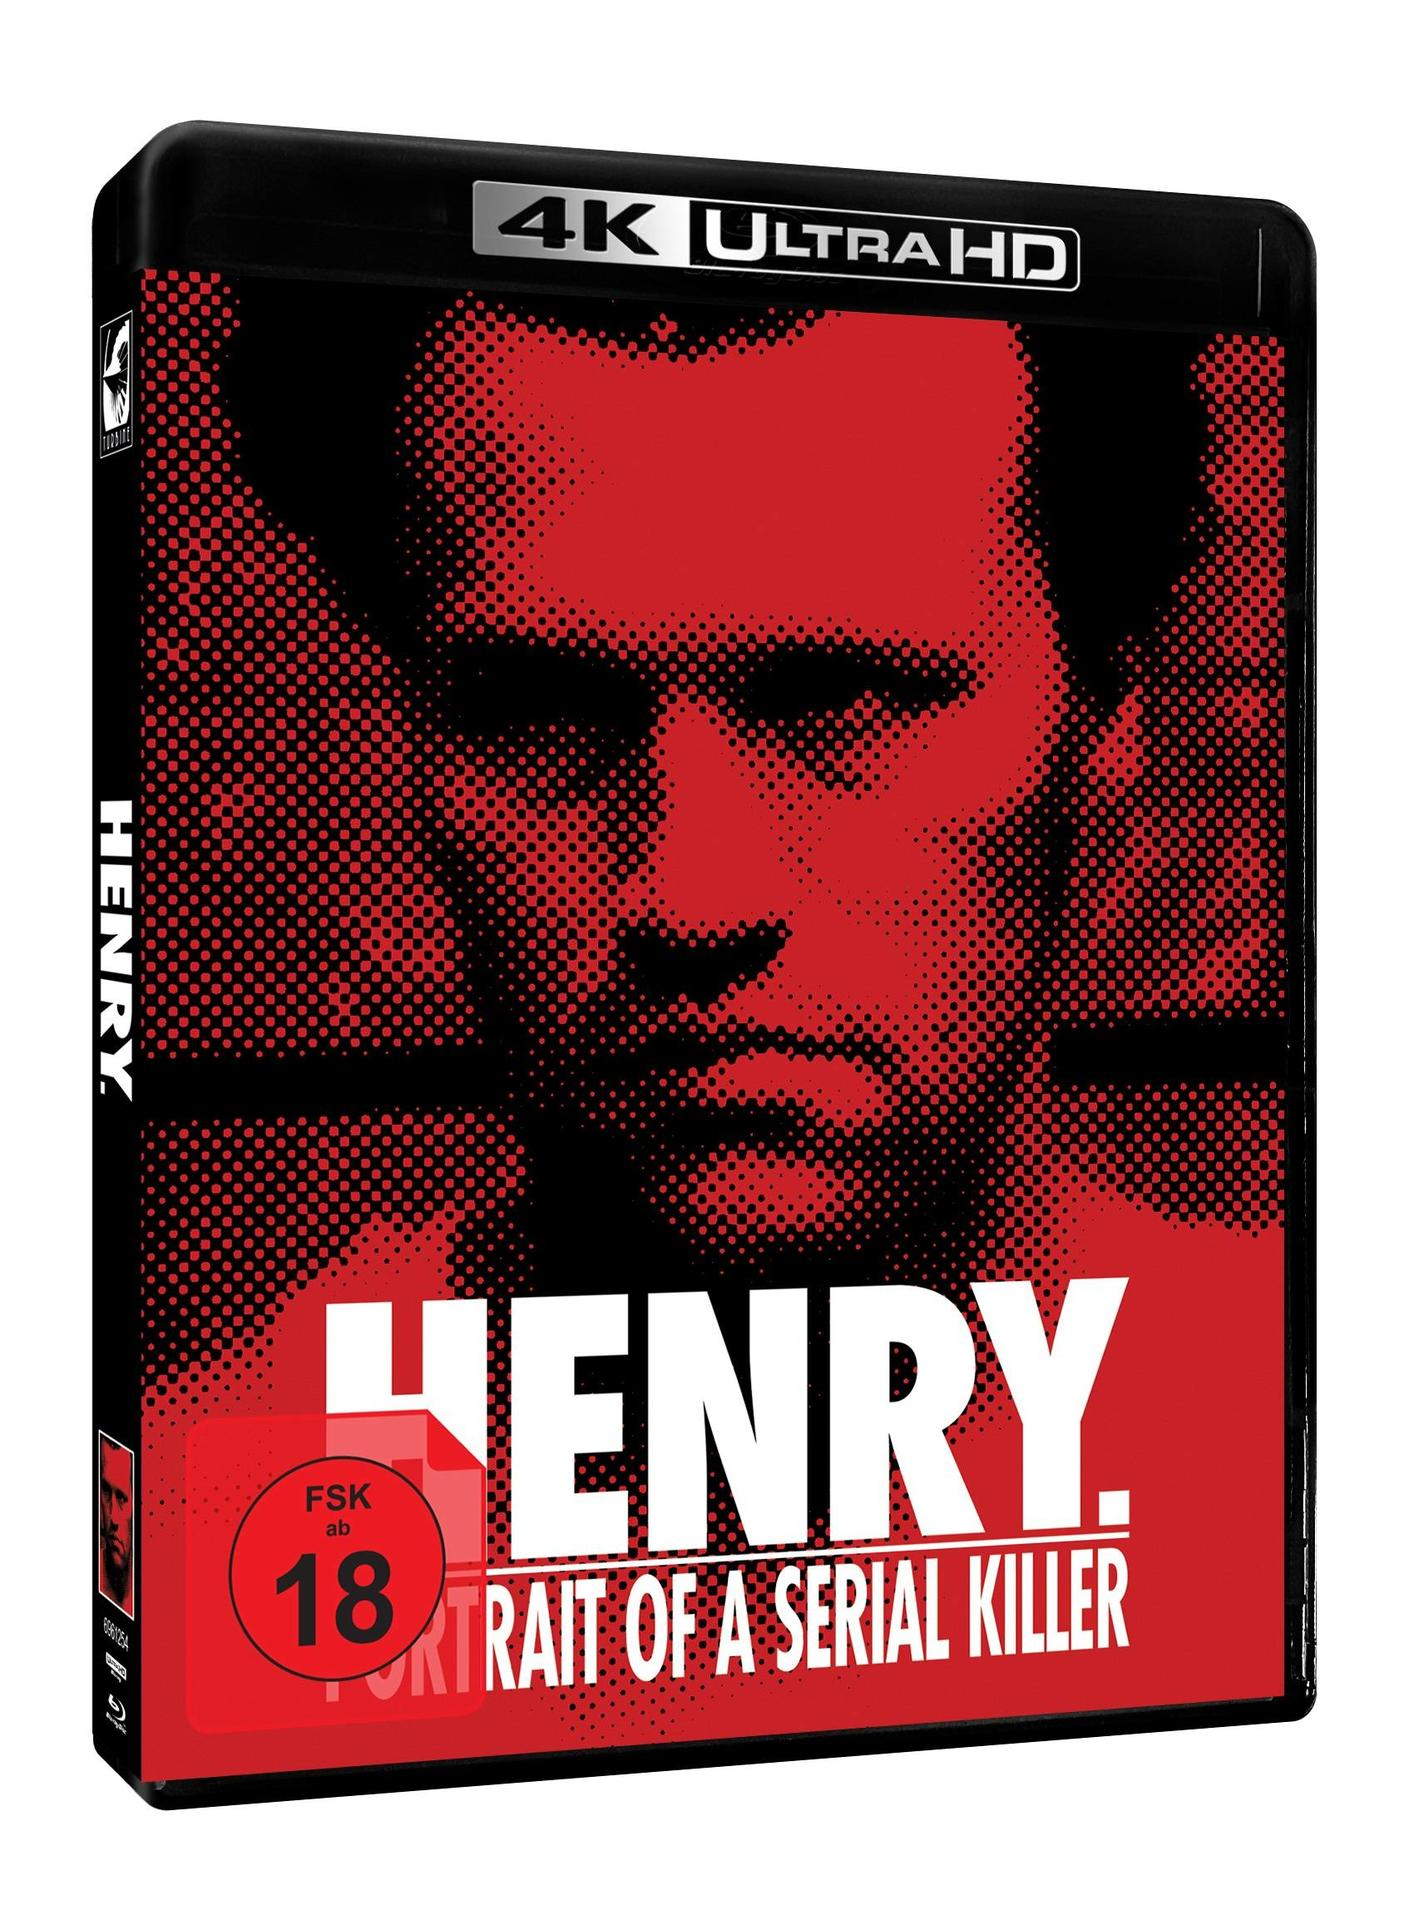 4K a Serial HD Killer Blu-ray Blu-ray Henry: Ultra of Portrait +